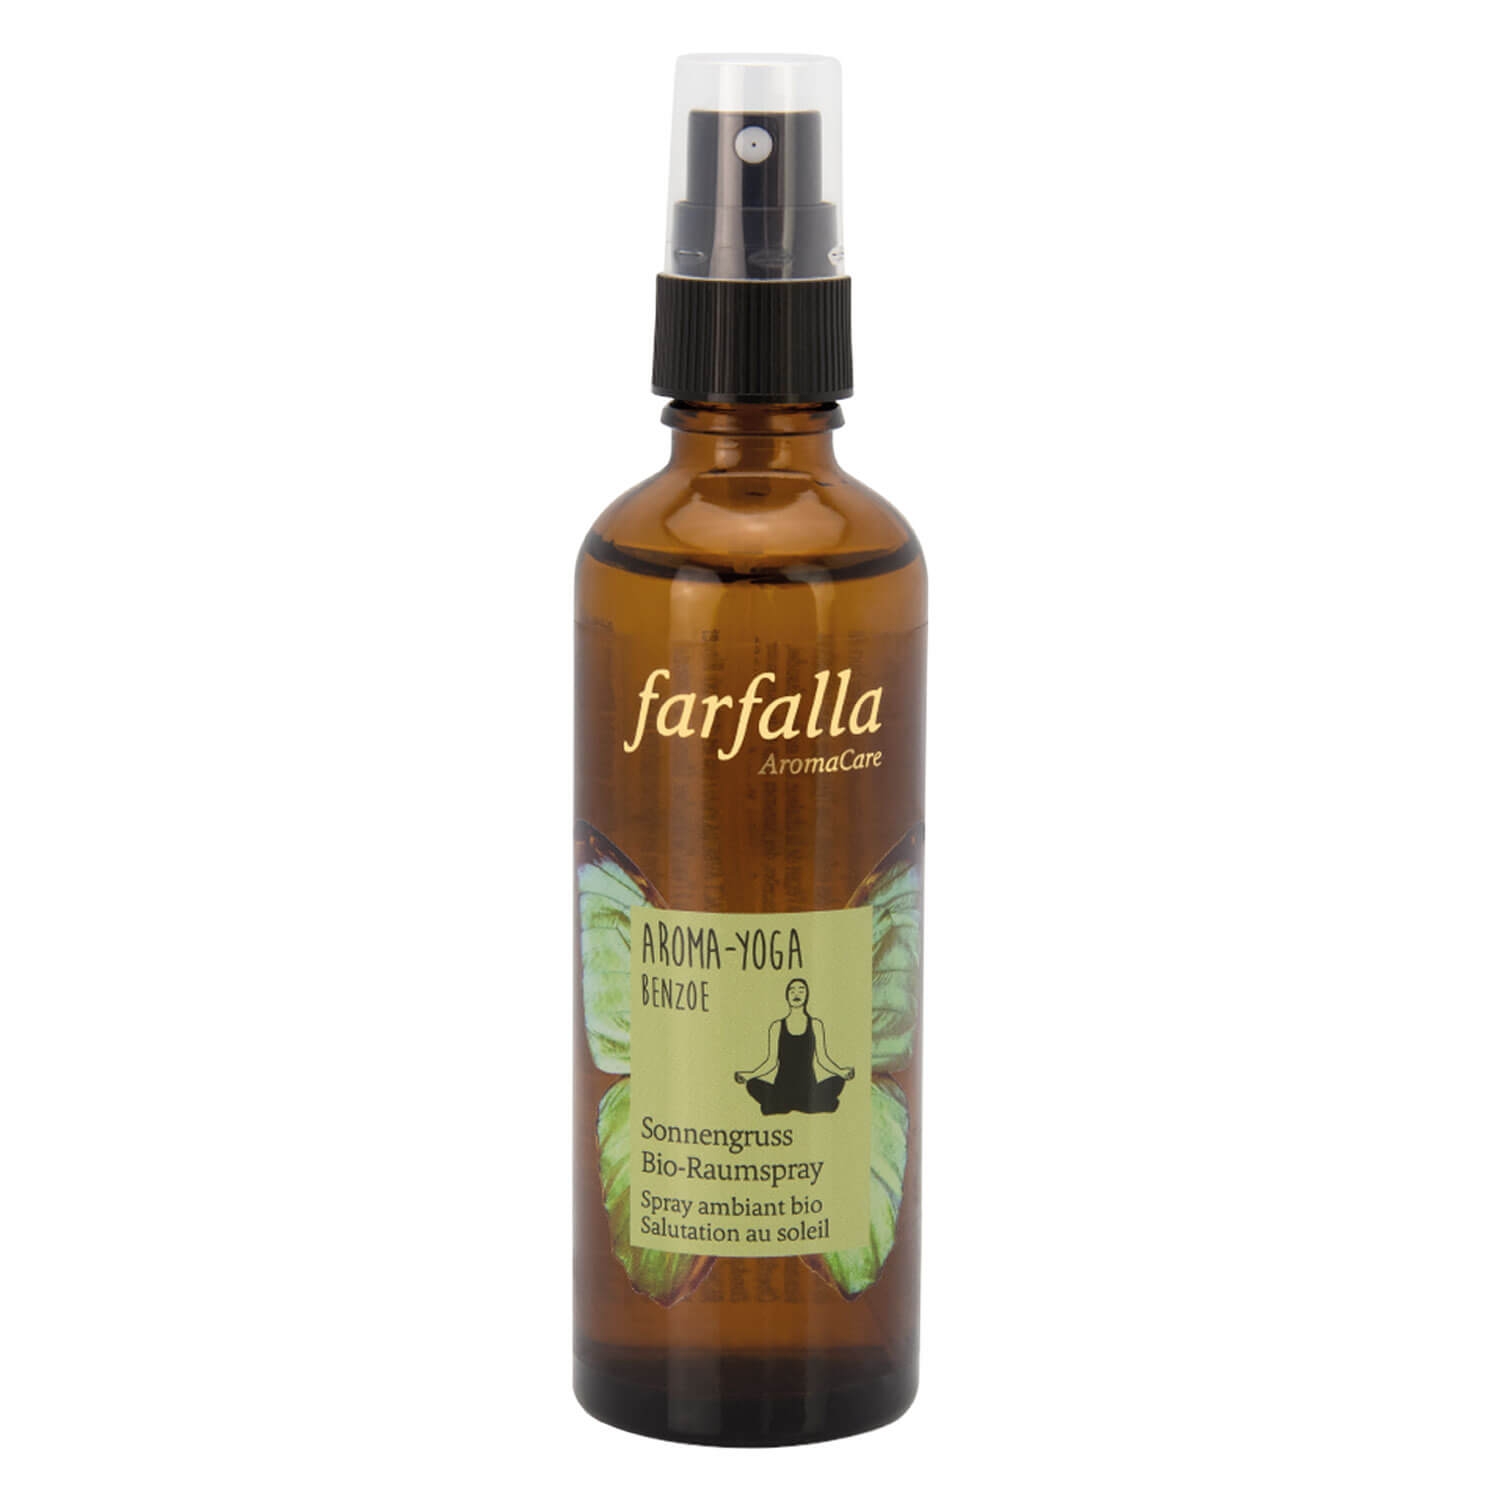 Product image from Farfalla Aroma-Yoga - Benzoe Sonnengruss Bio-Raumspray